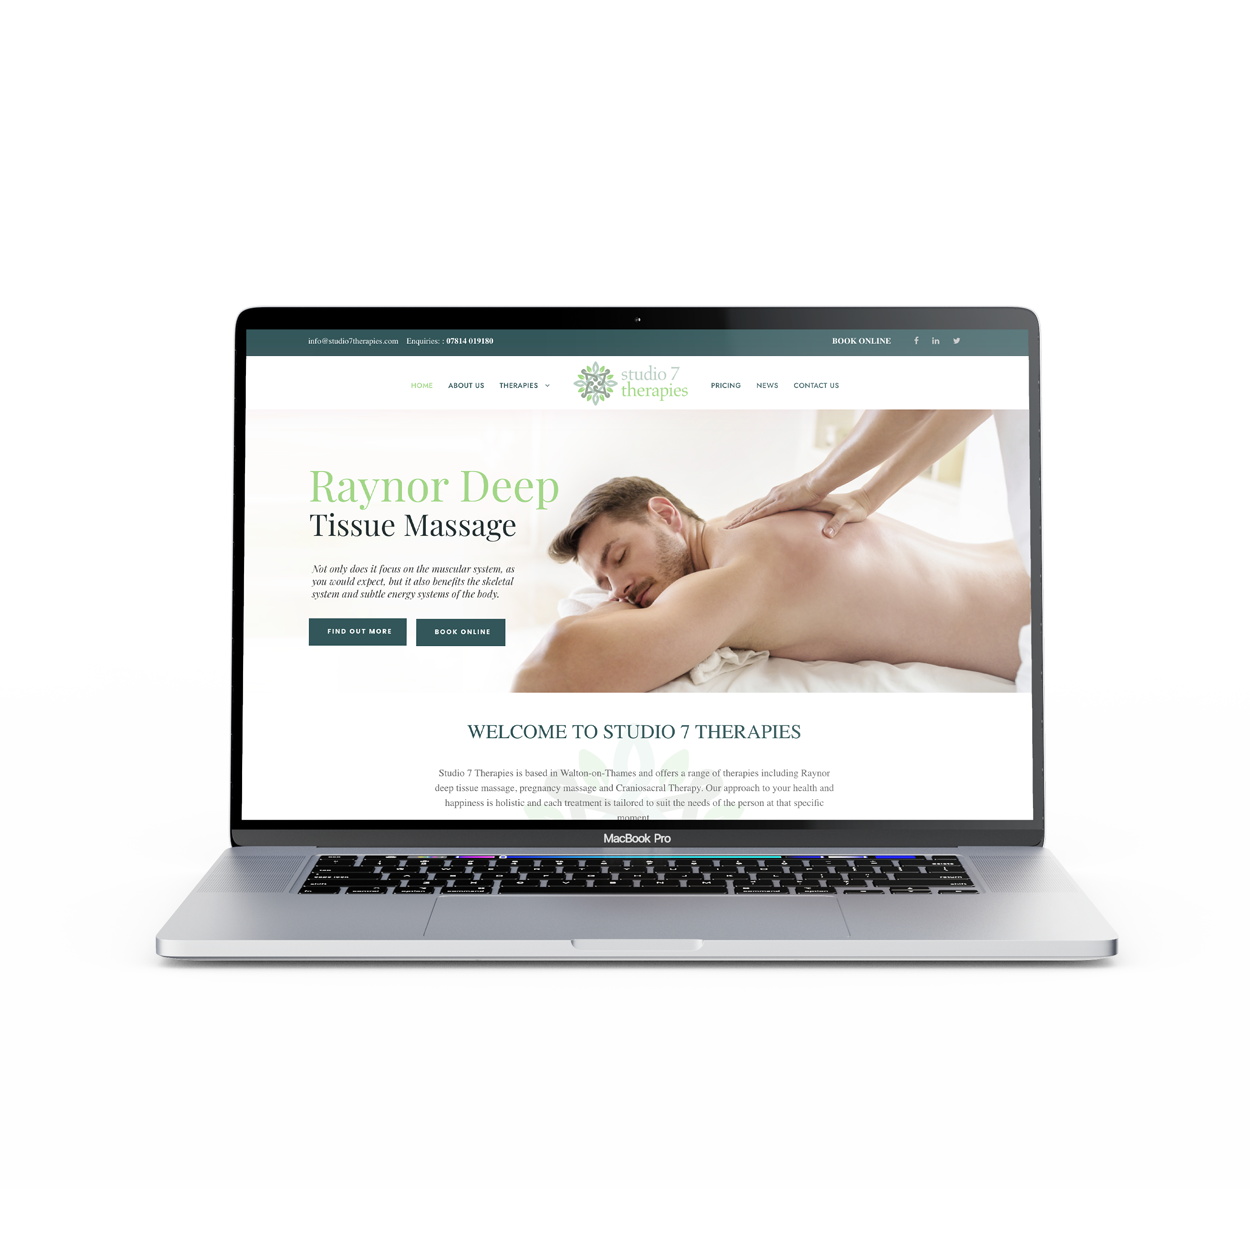 Studio 7 massage therapies website design and SEO